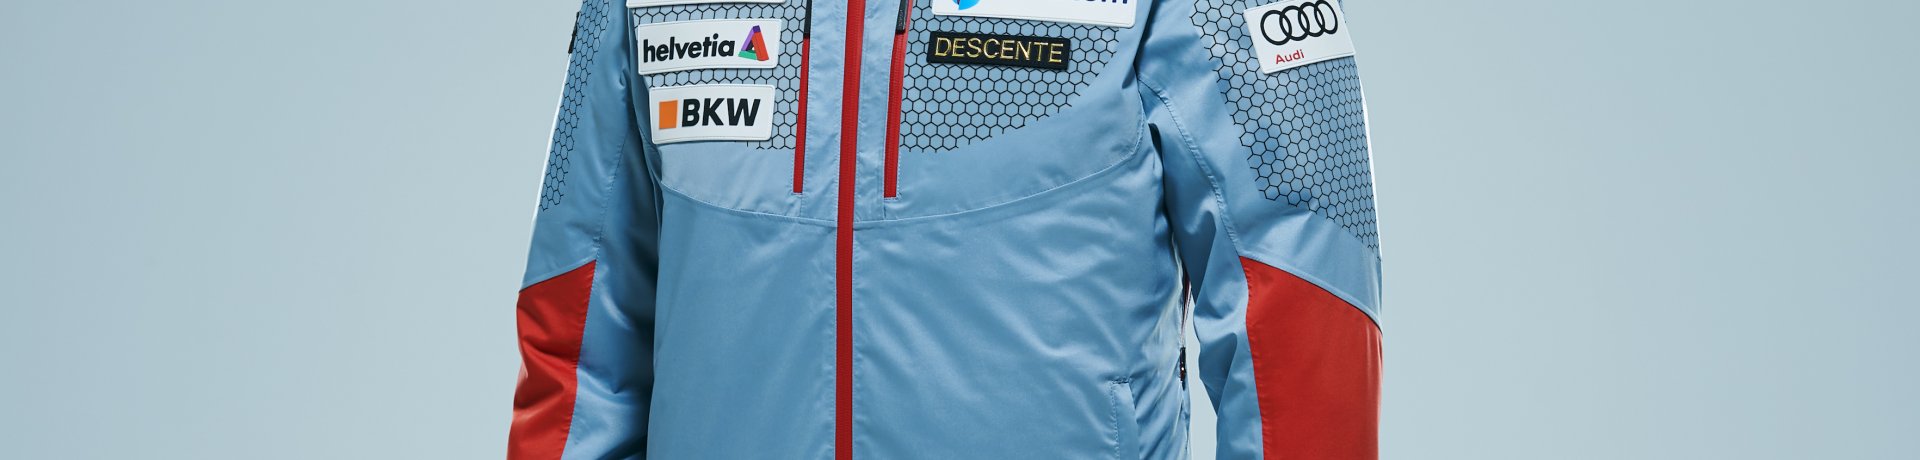 DESCENTE Swiss Ski Replica Lightweight Jacket